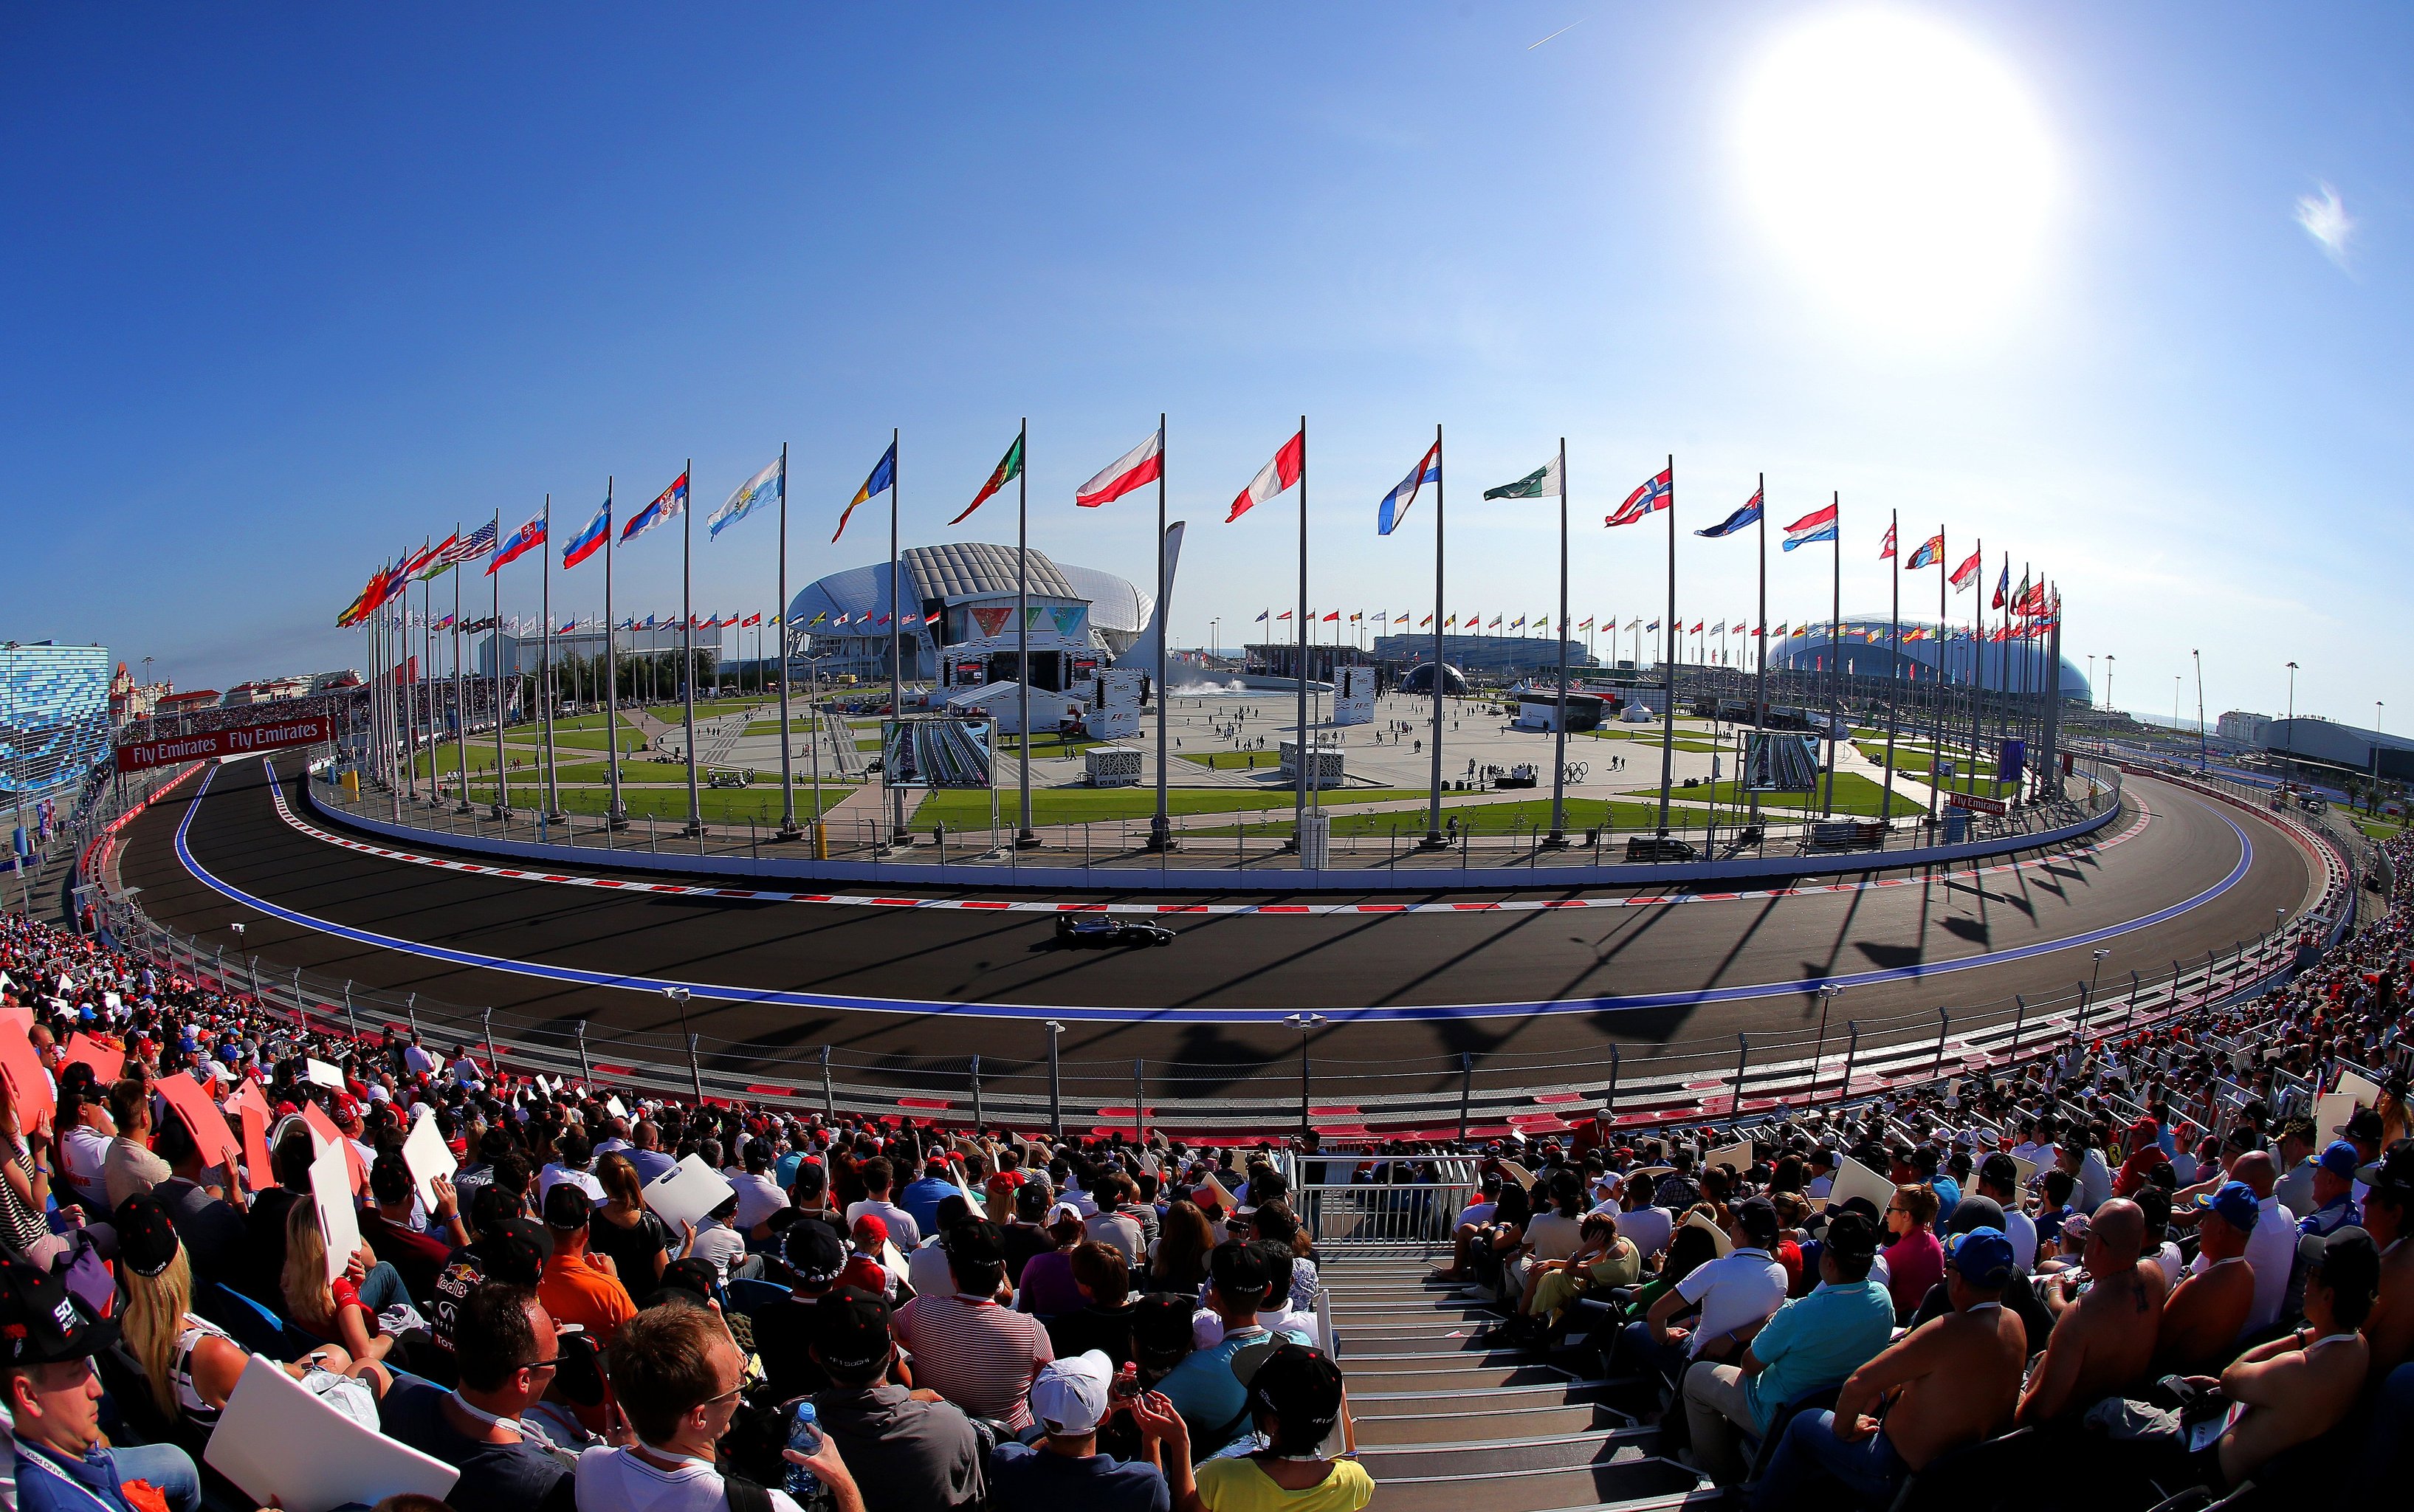 Формула 1 рф. Гран при формула 1 Сочи 2014. Формула 1 Сочи. Трасса формулы 1 в Сочи. Стадион формулы 1 в Сочи.